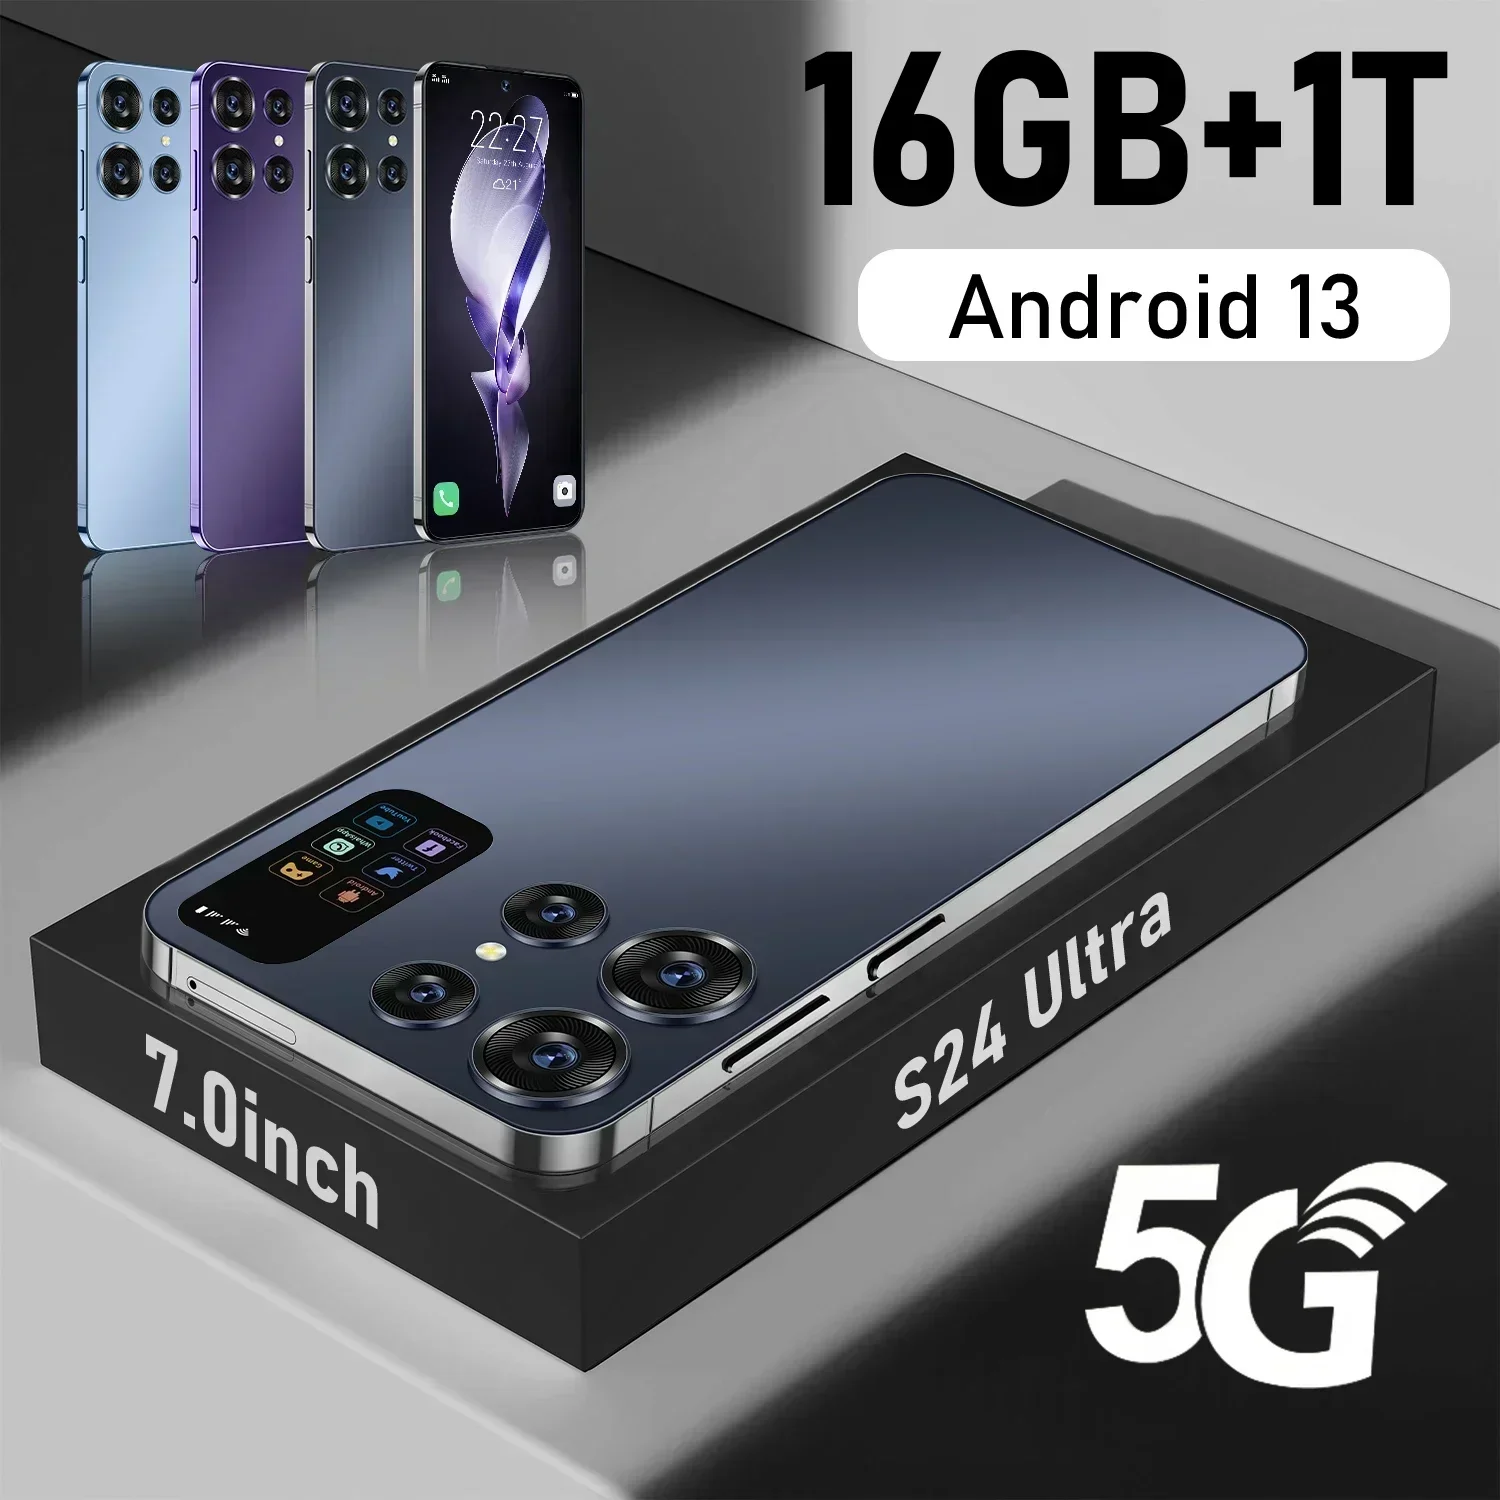 

Брендовый смартфон Global s24 s23 ultra 7.0HD, 16 ГБ + 1 ТБ, 7000 мАч, Android 13, Celulare, две Sim-карты